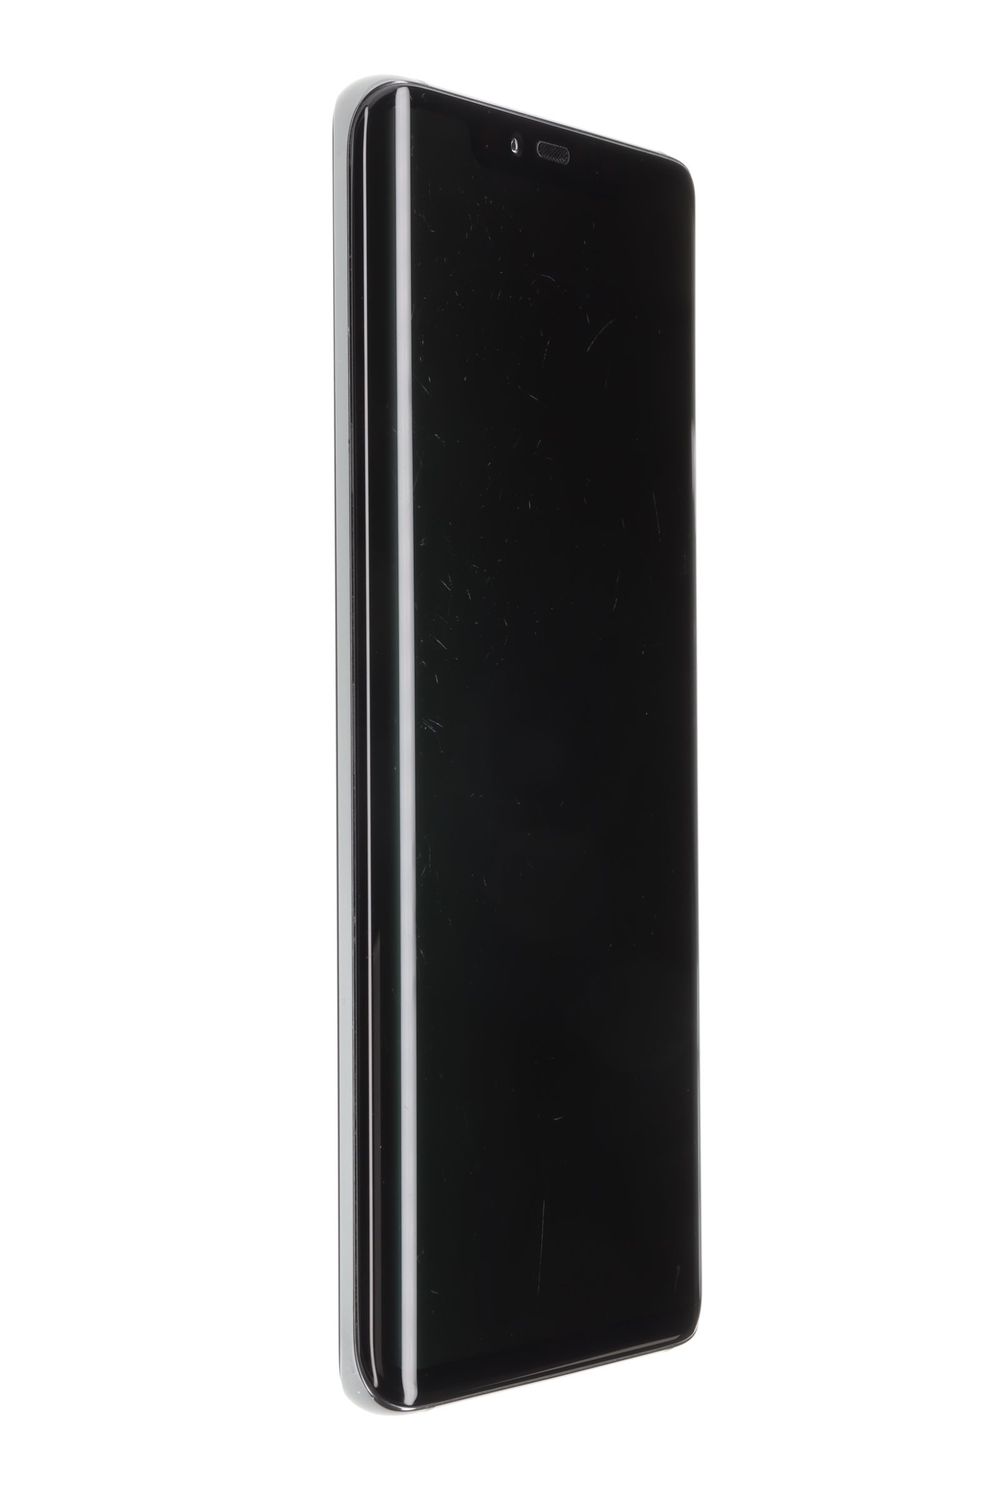 Mobiltelefon Huawei Mate 20 Pro Dual Sim, Black, 128 GB, Bun